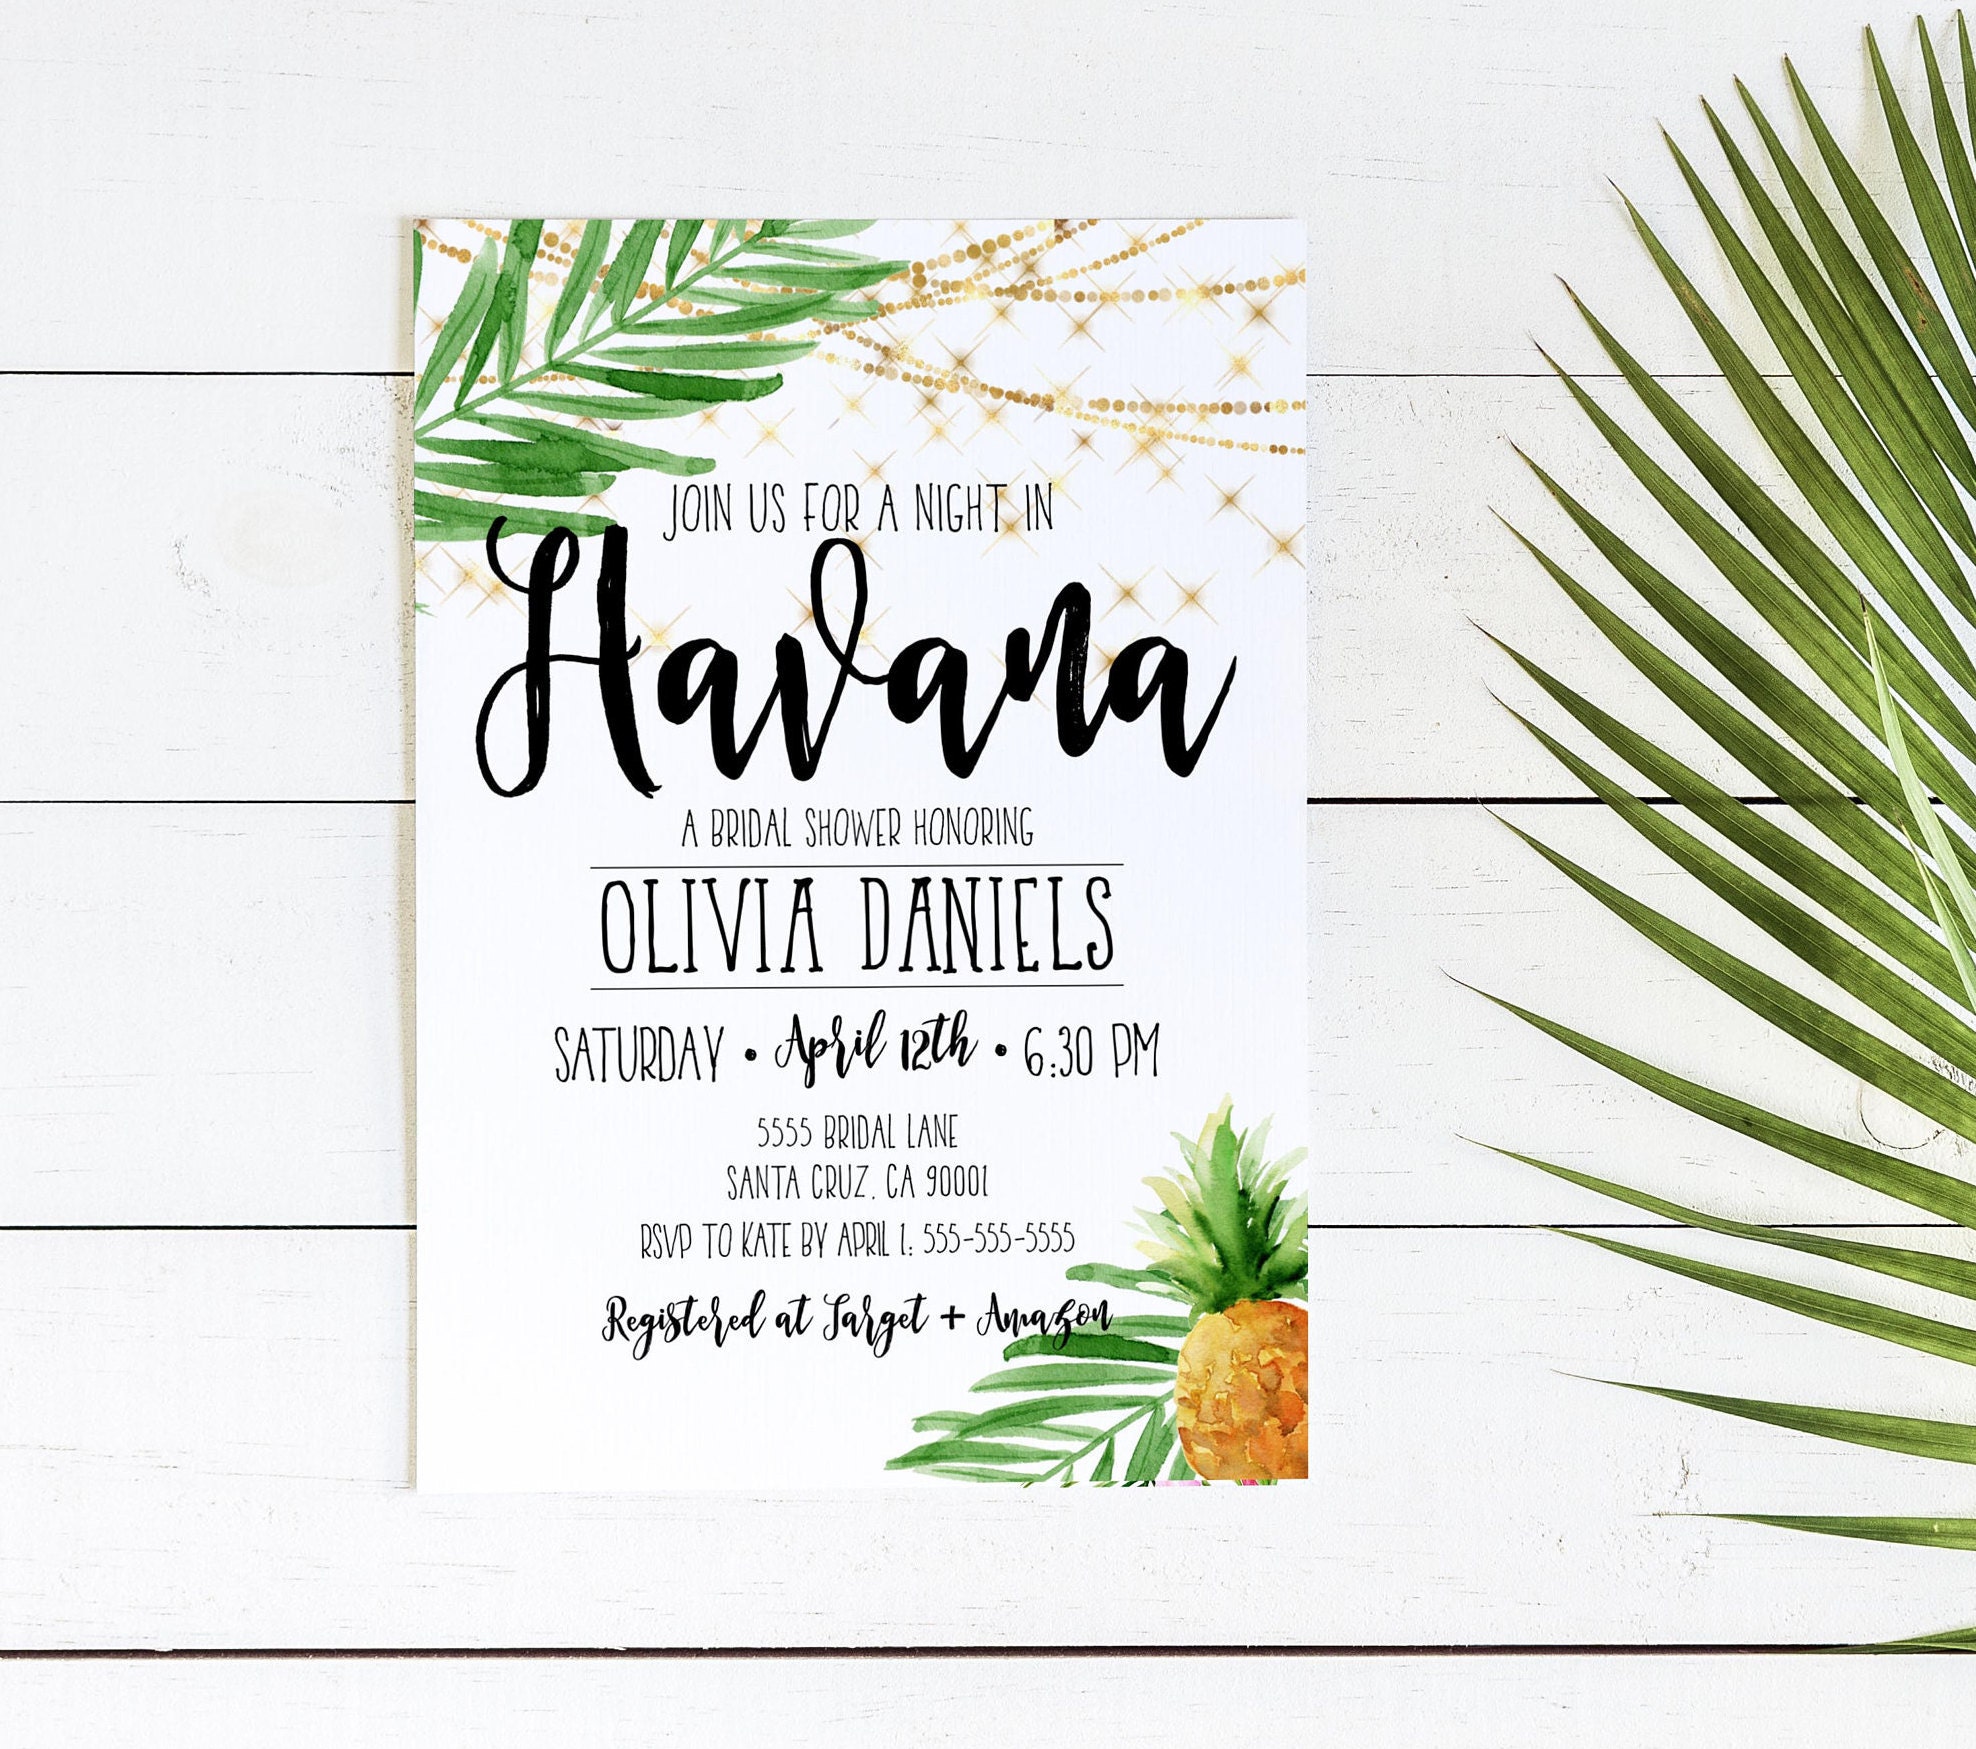 havana-nights-invitation-cuban-party-cuba-miami-tropical